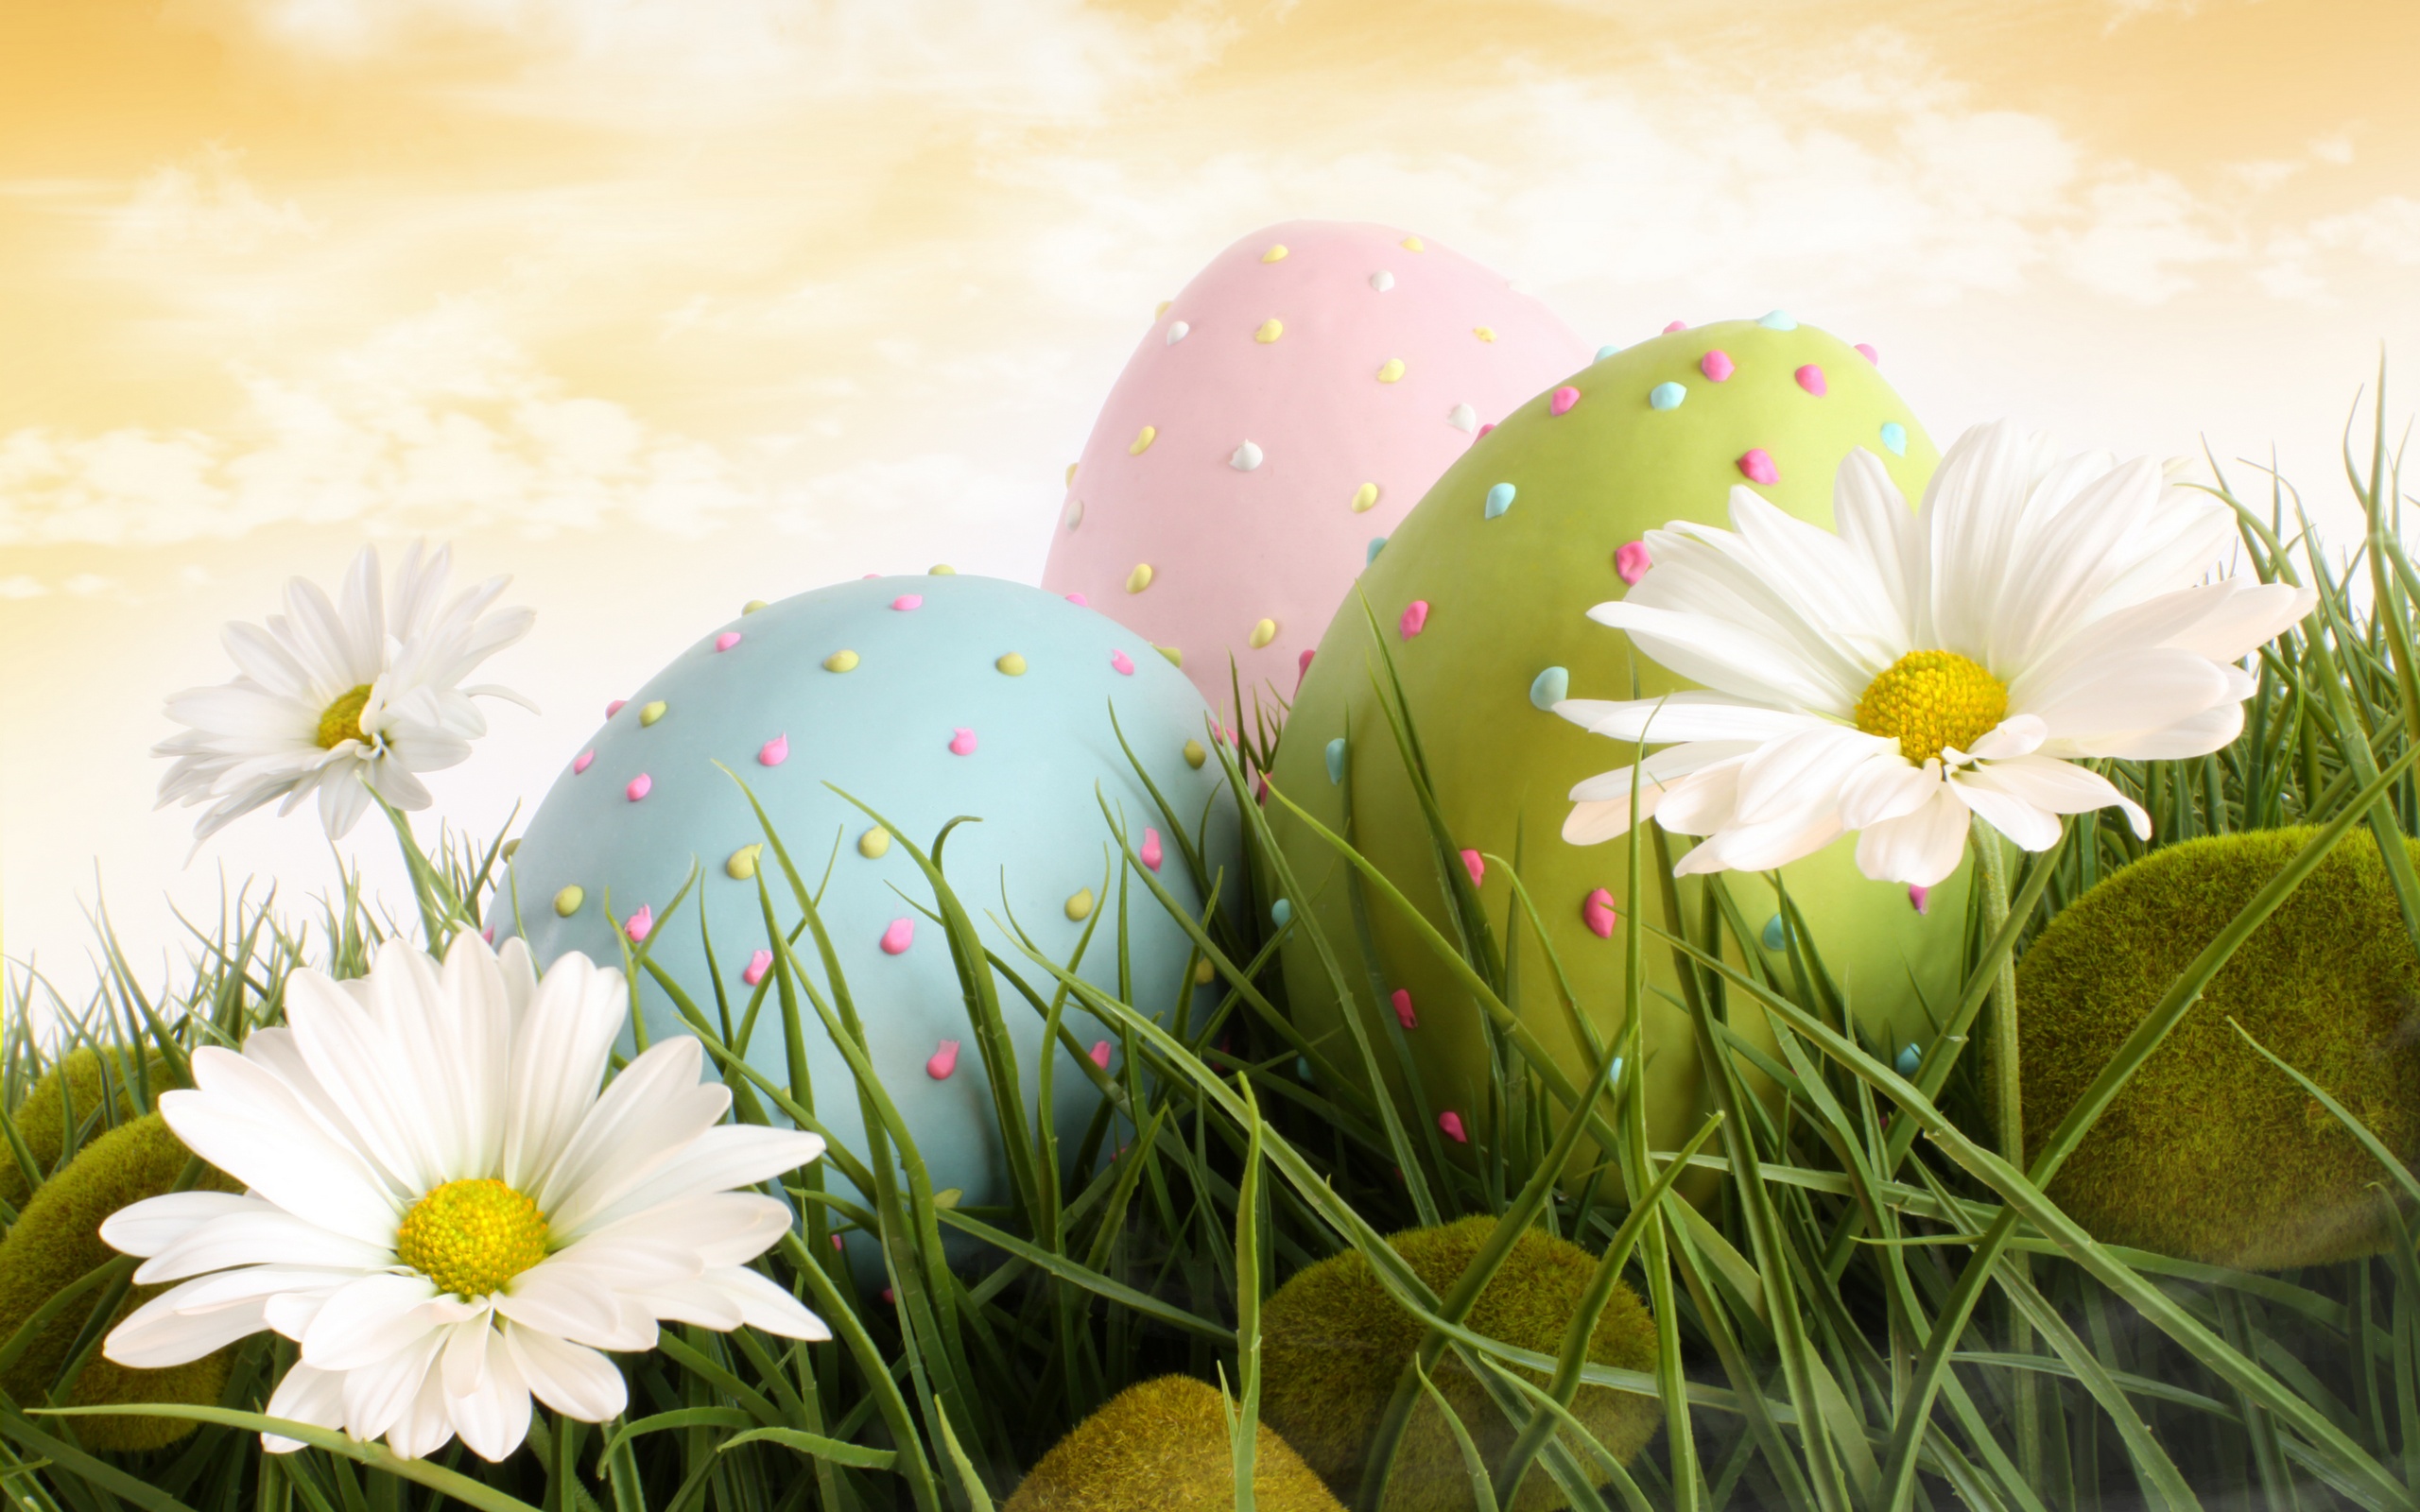 Easter Bunny & Eggs 8K wallpaper download